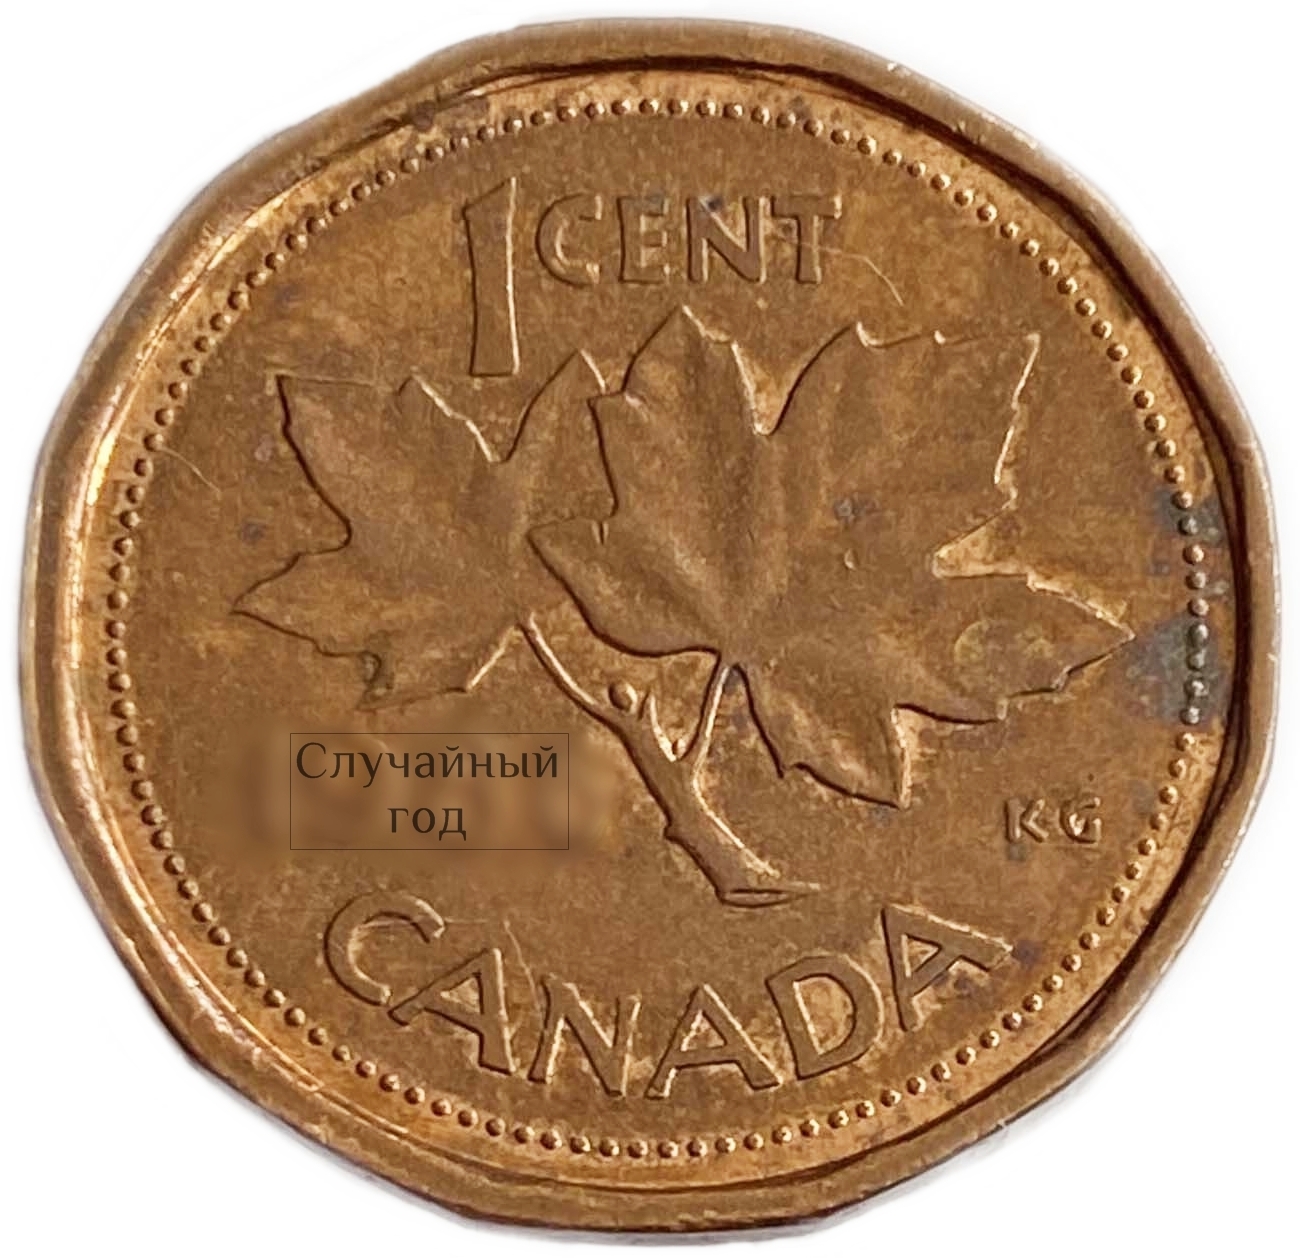 Канада 1. 1 Цент Канада 1990-2003. Монета цент Либерти 1962 года. 1 Цент 1982-1989 Канада. Канадские монеты.